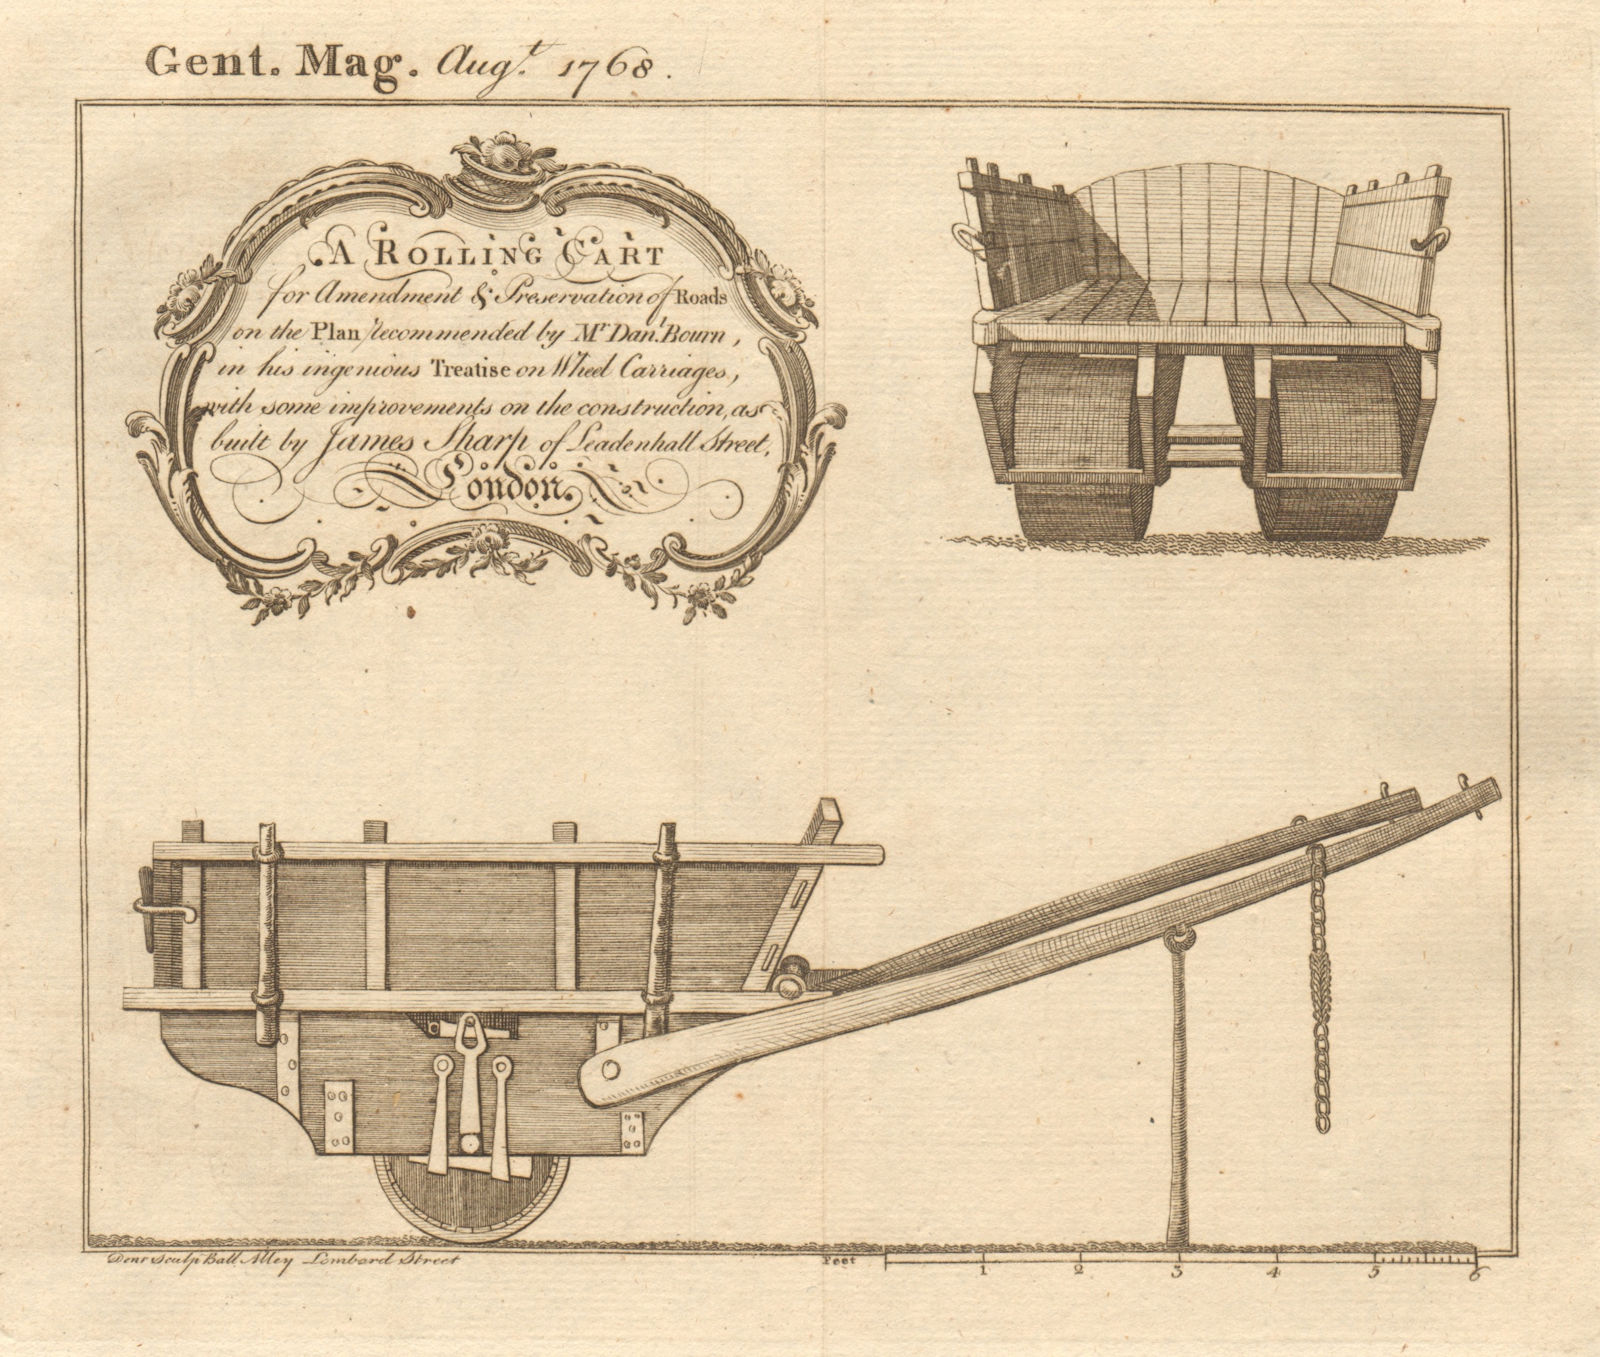 Rolling cart for road maintenance. Design Daniel Bourn. Built James Sharp 1768